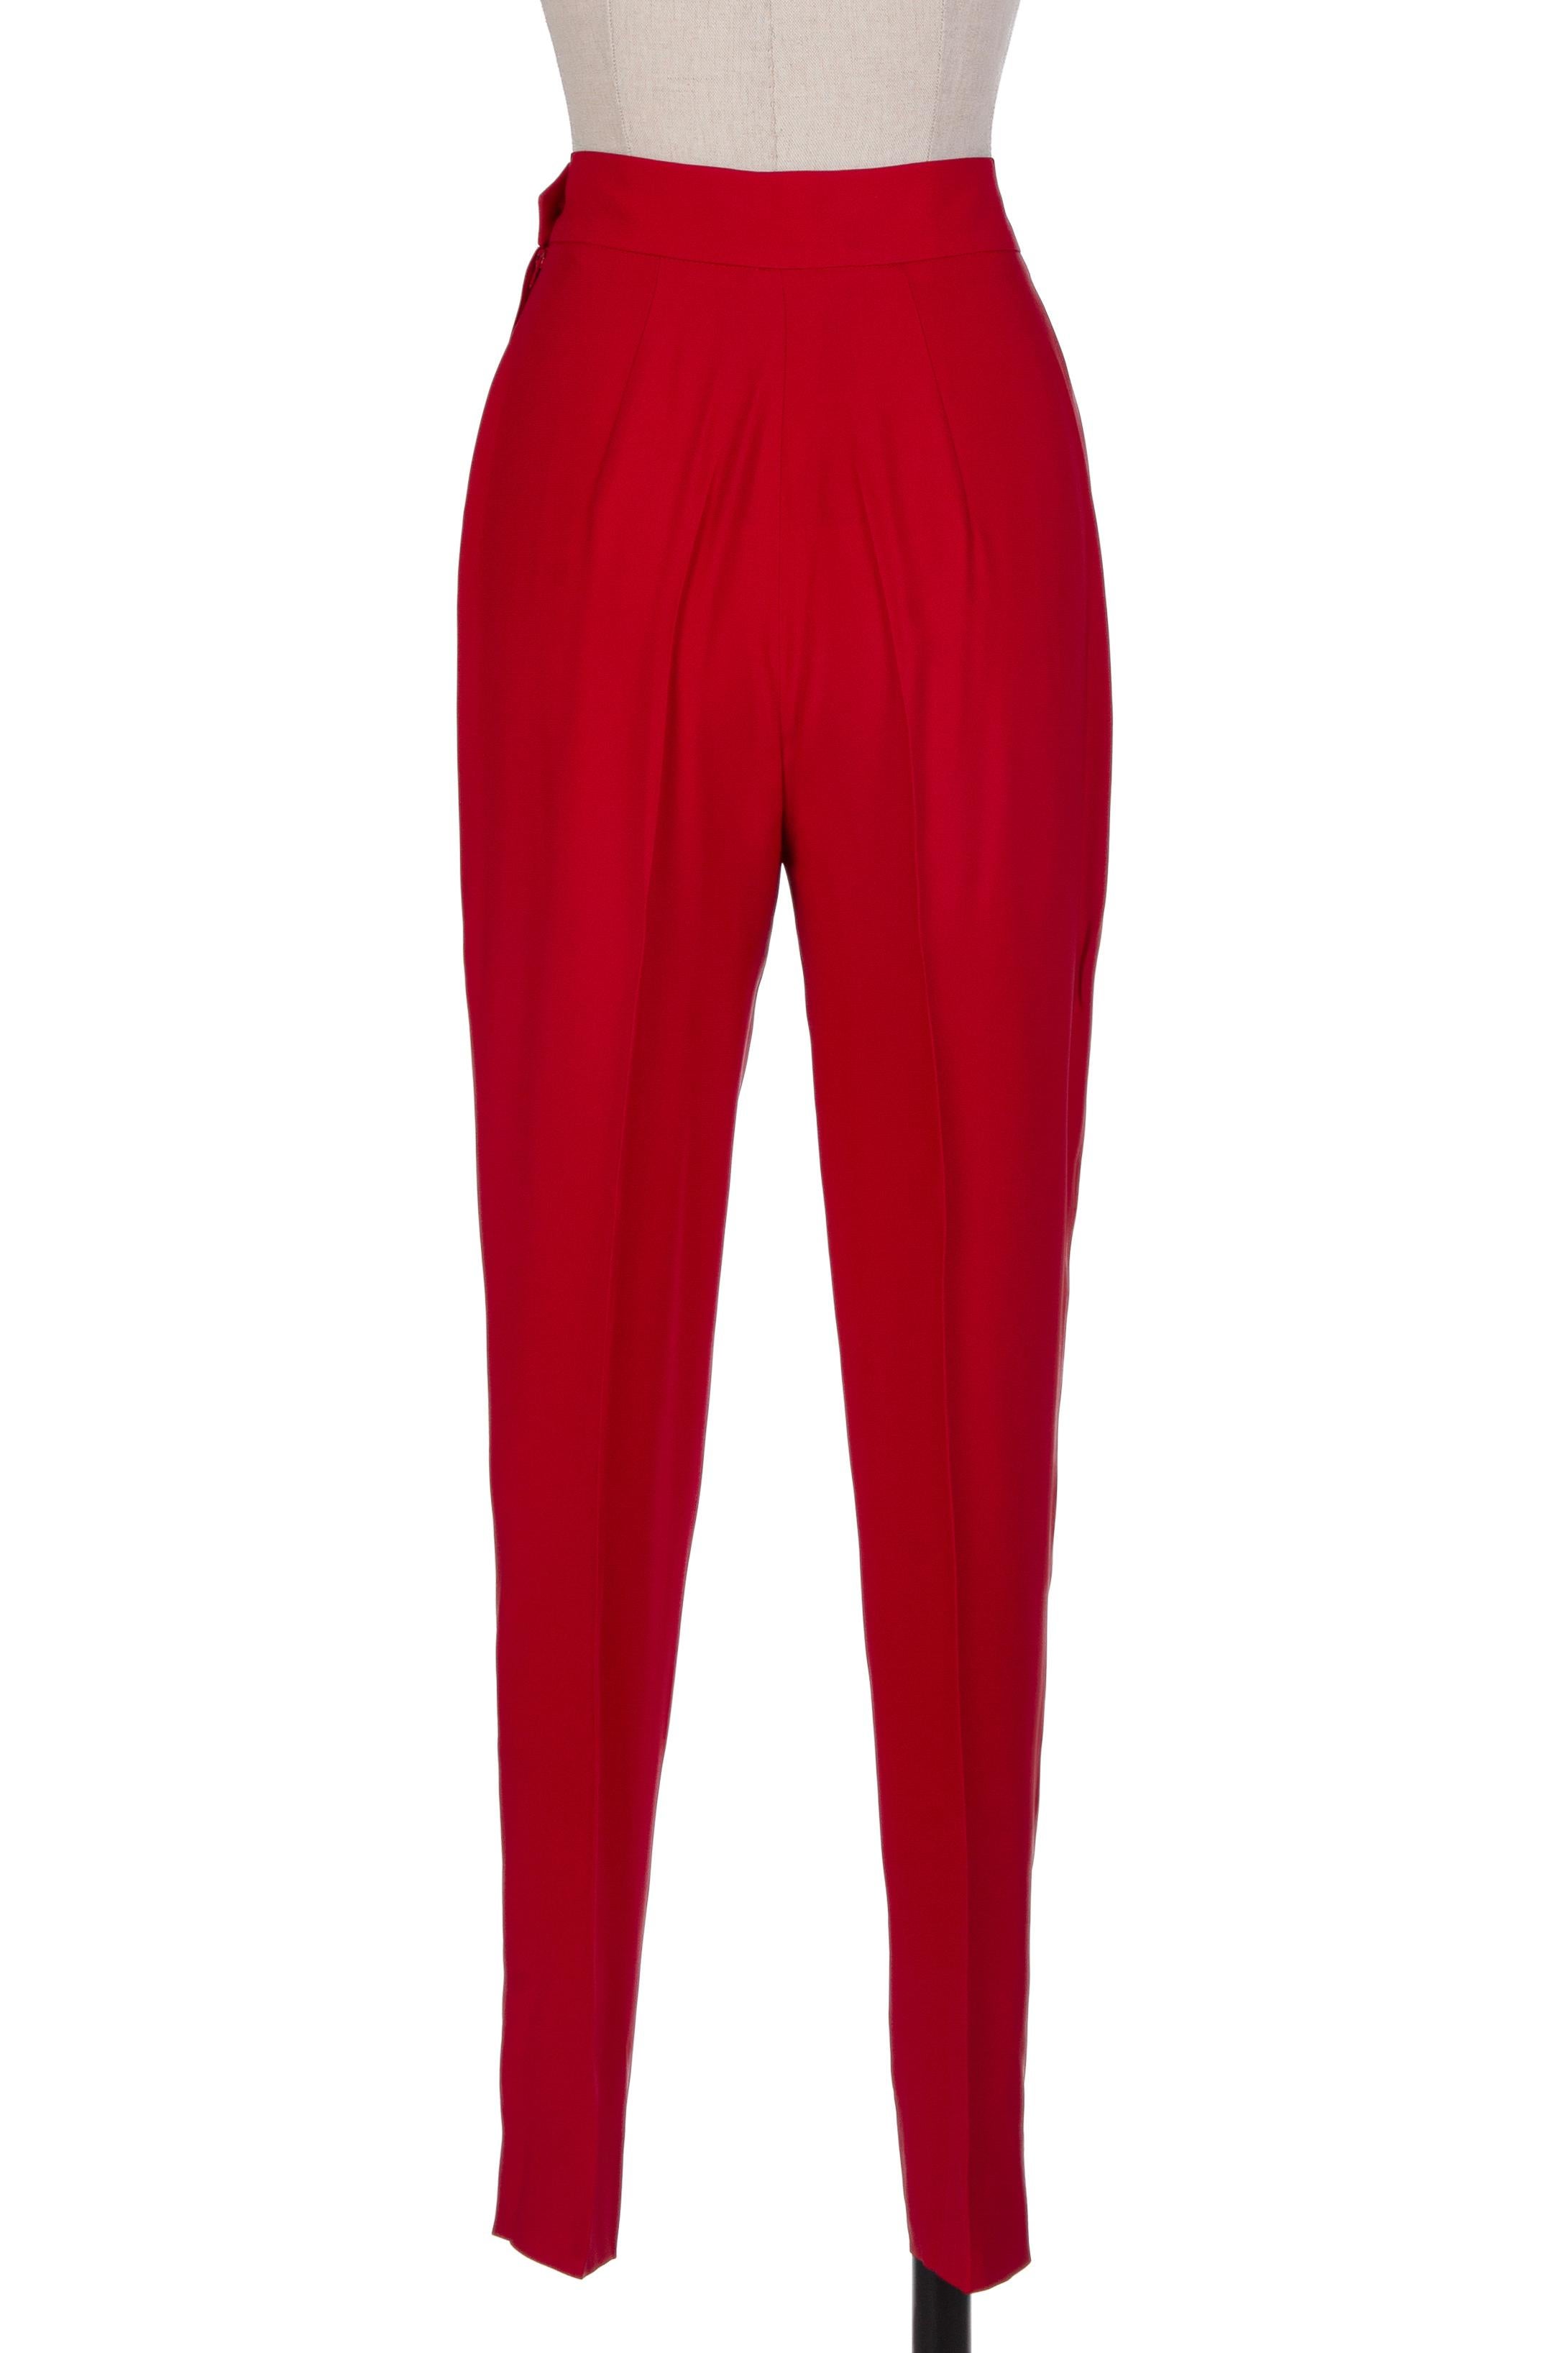 1989 MOSCHINO COUTURE Red I Love Venice Lion Appliquéd Jacket & Pant Suit For Sale 5